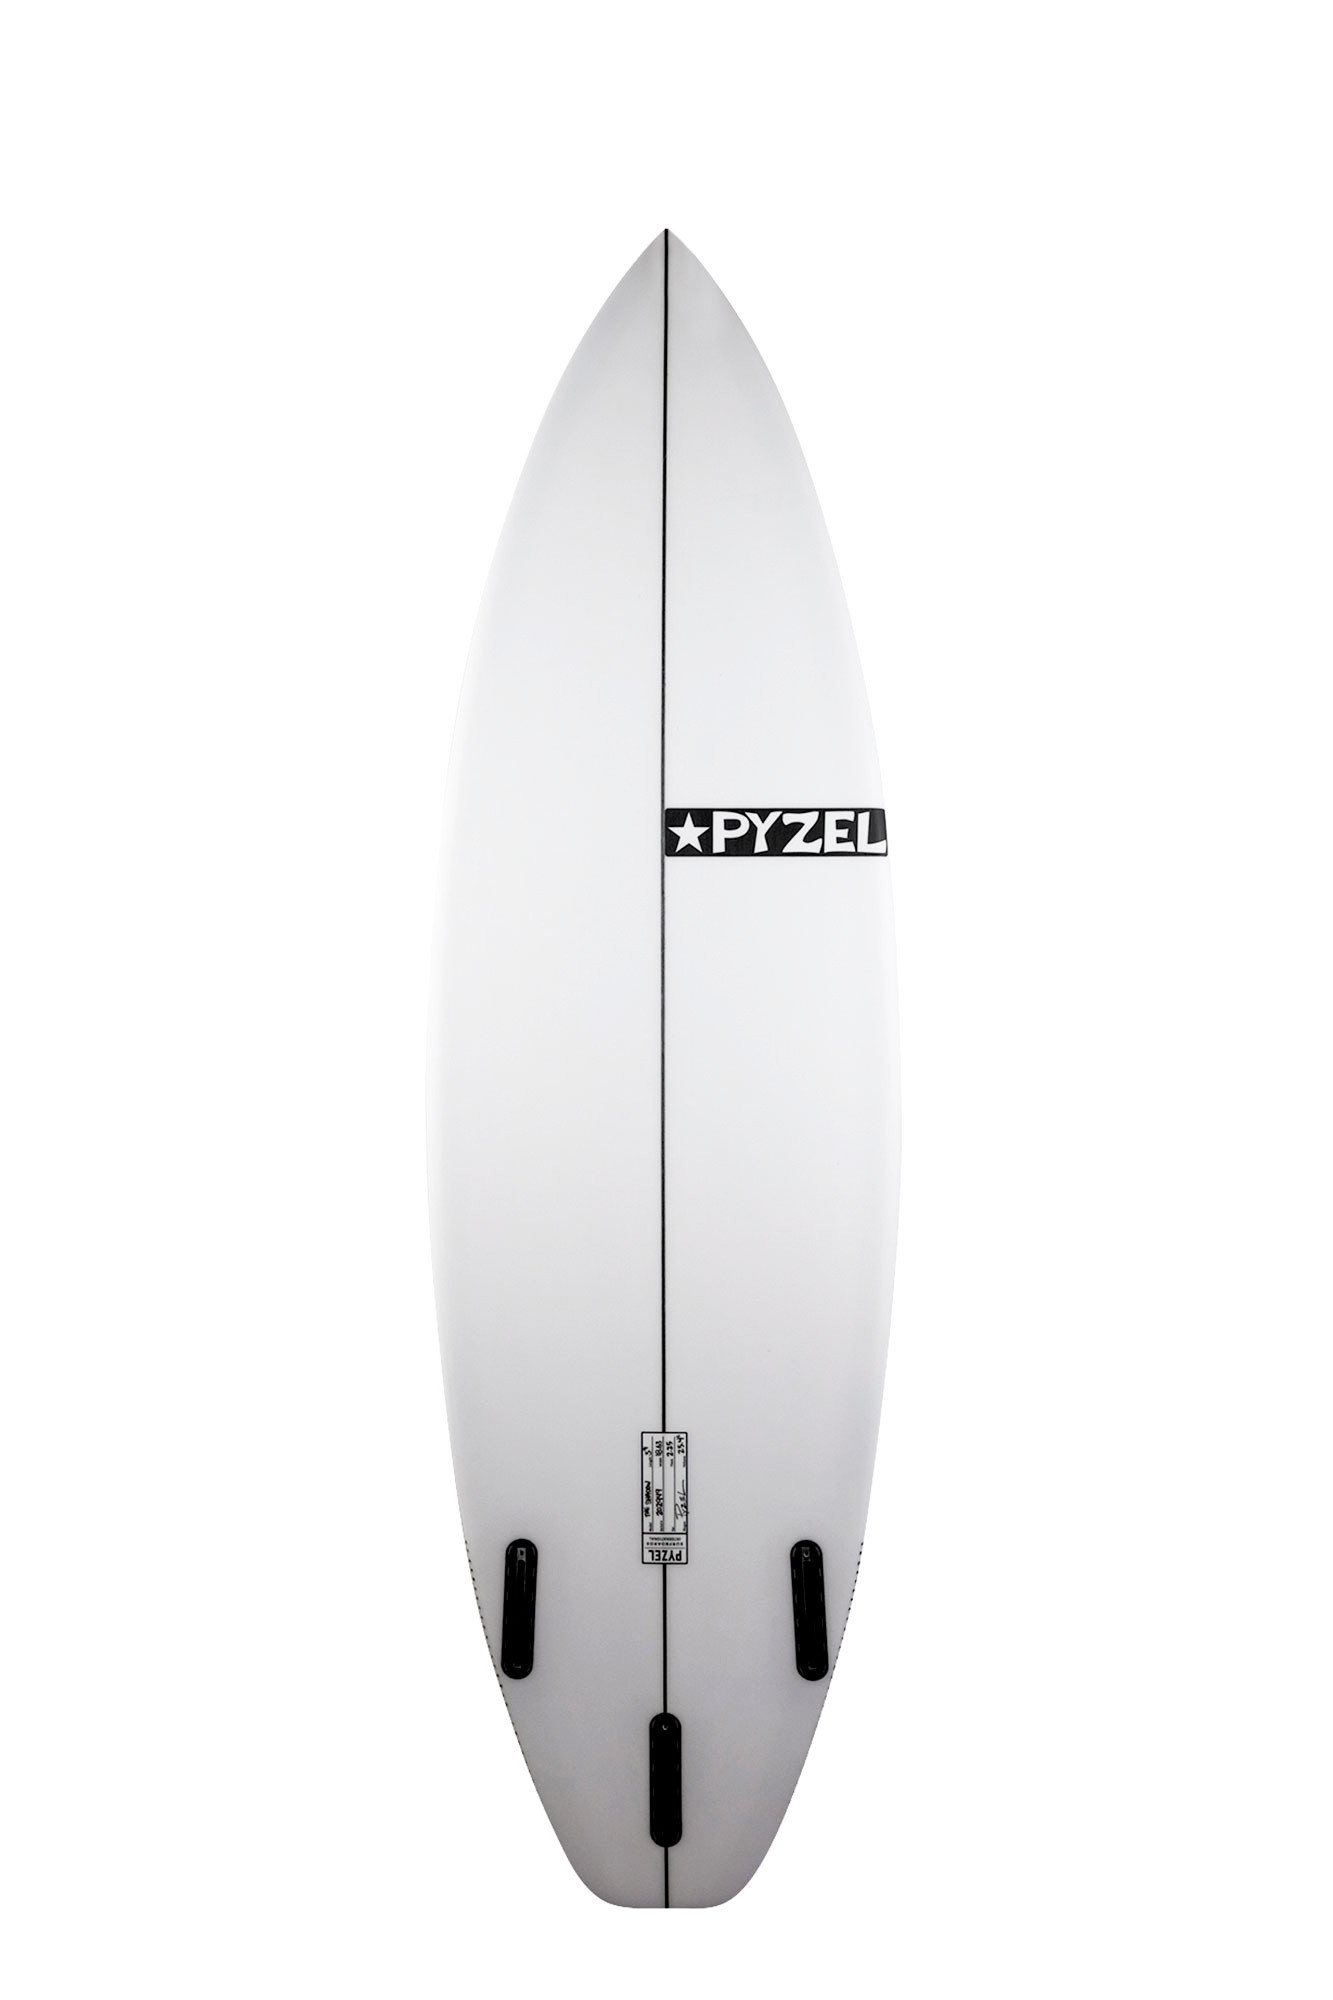 PYZELサーフボード 5.7フィート - サーフィン